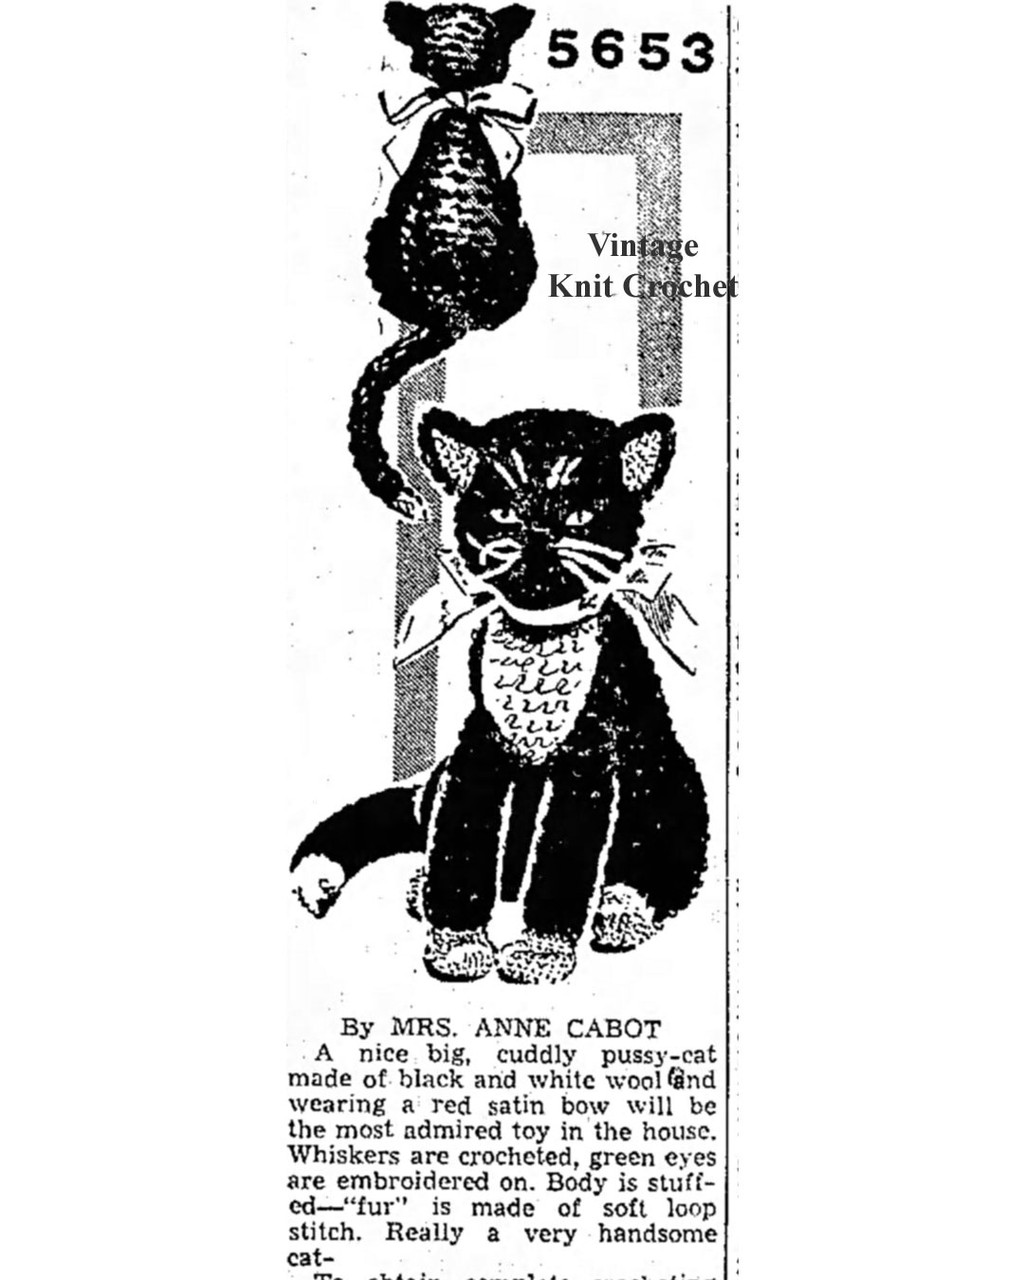 Crochet Cat Pattern, Anne Cabot 5653 newspaper advertisement 